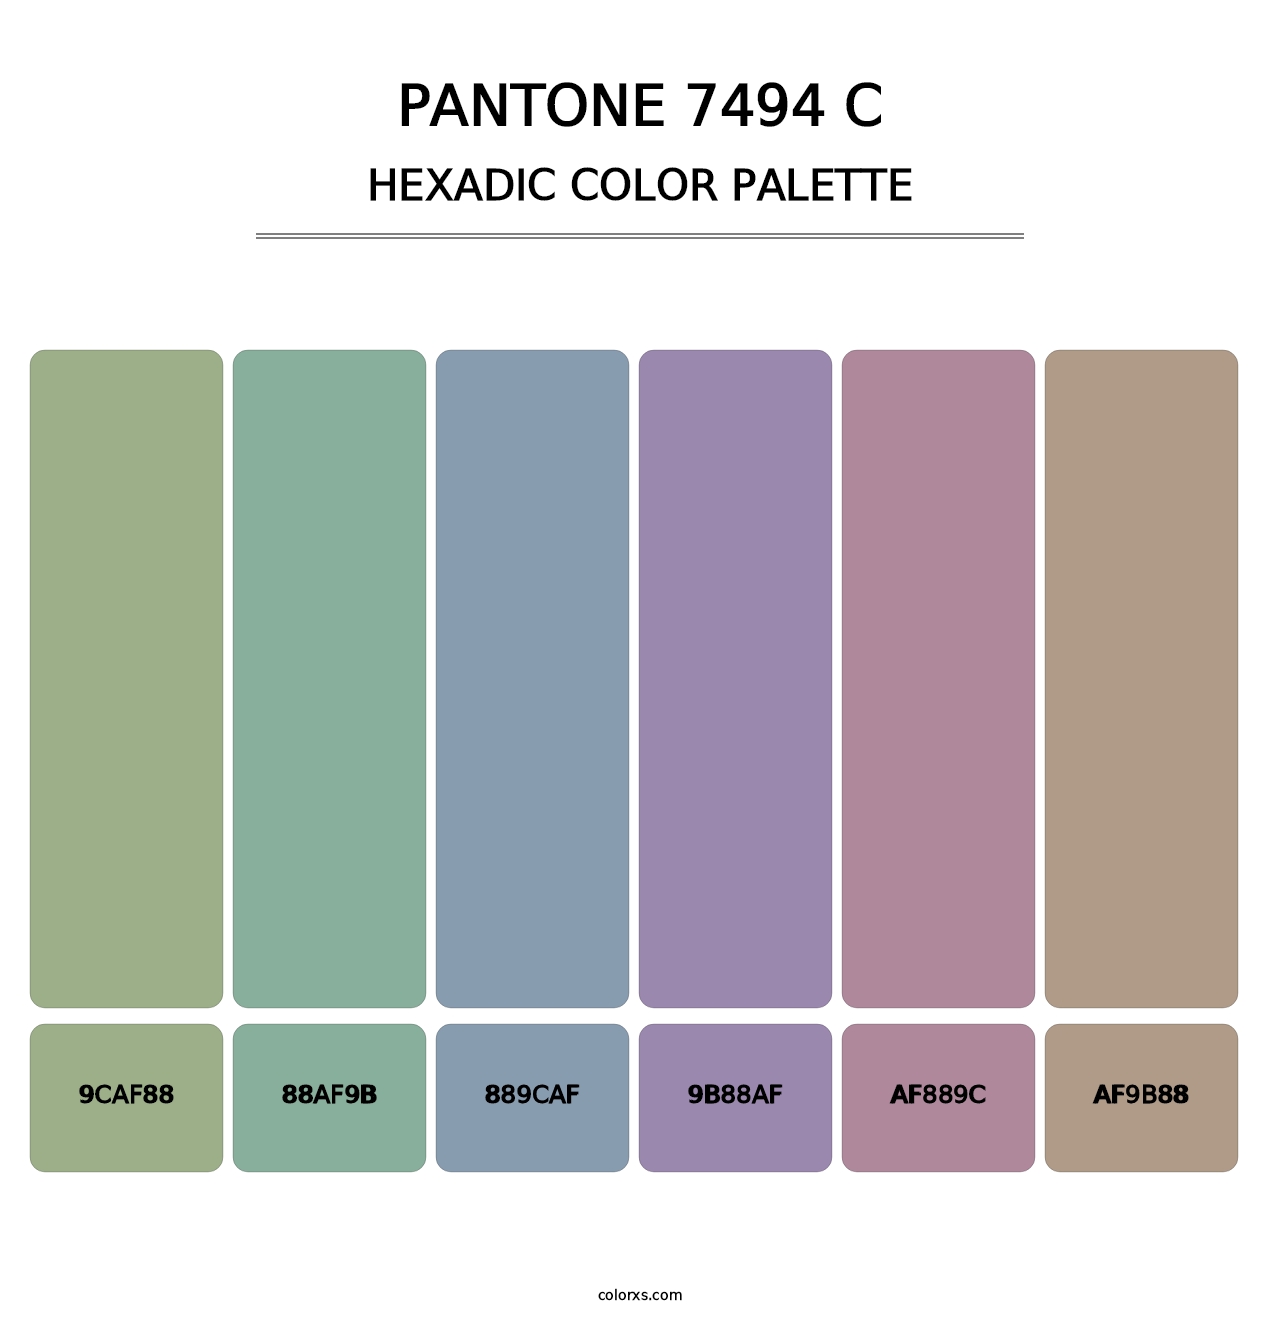 PANTONE 7494 C - Hexadic Color Palette